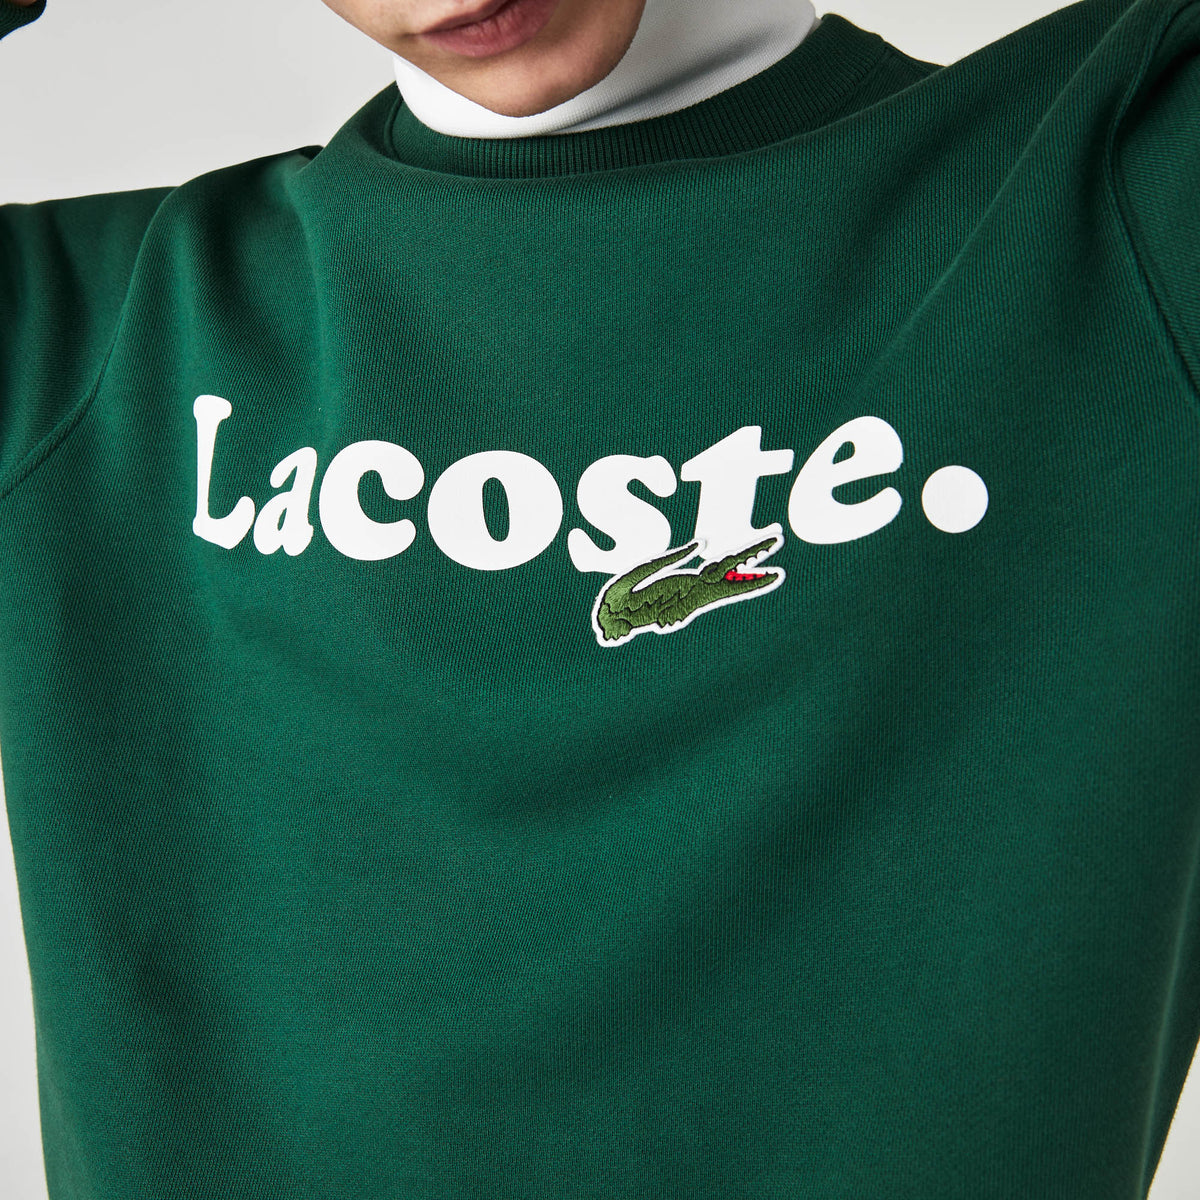 LaCoste-Lacoste And Crocodile Branded Fleece Sweatshirt-Green • 132-SH2173